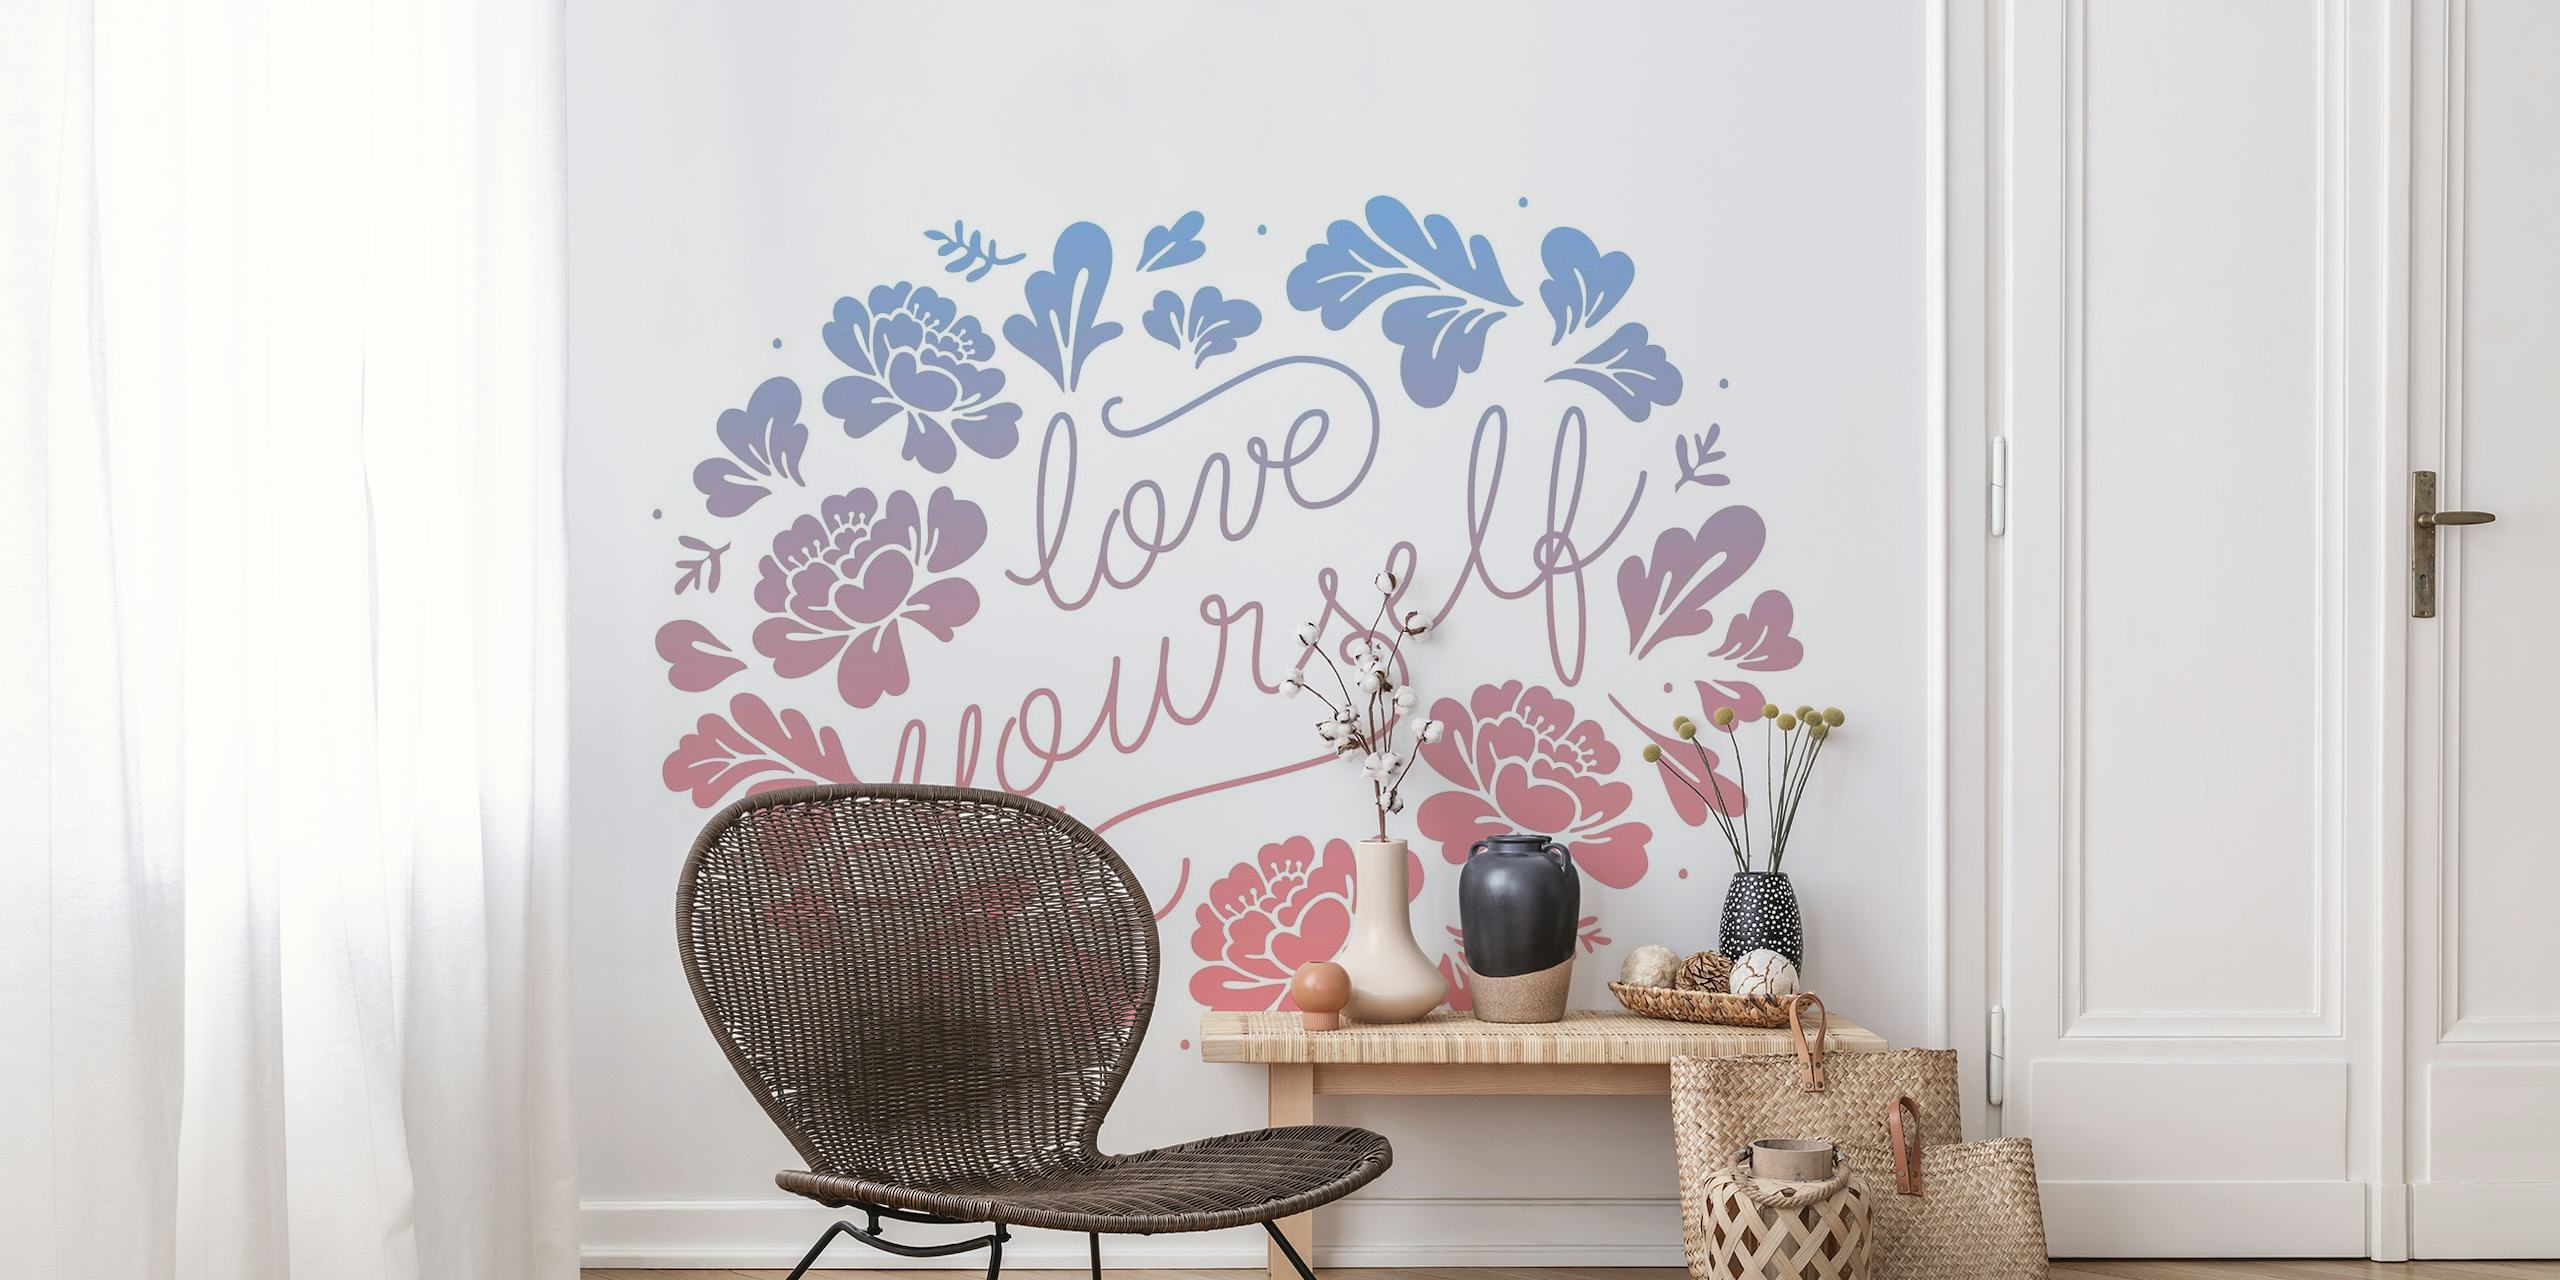 Love Yourself wallpaper